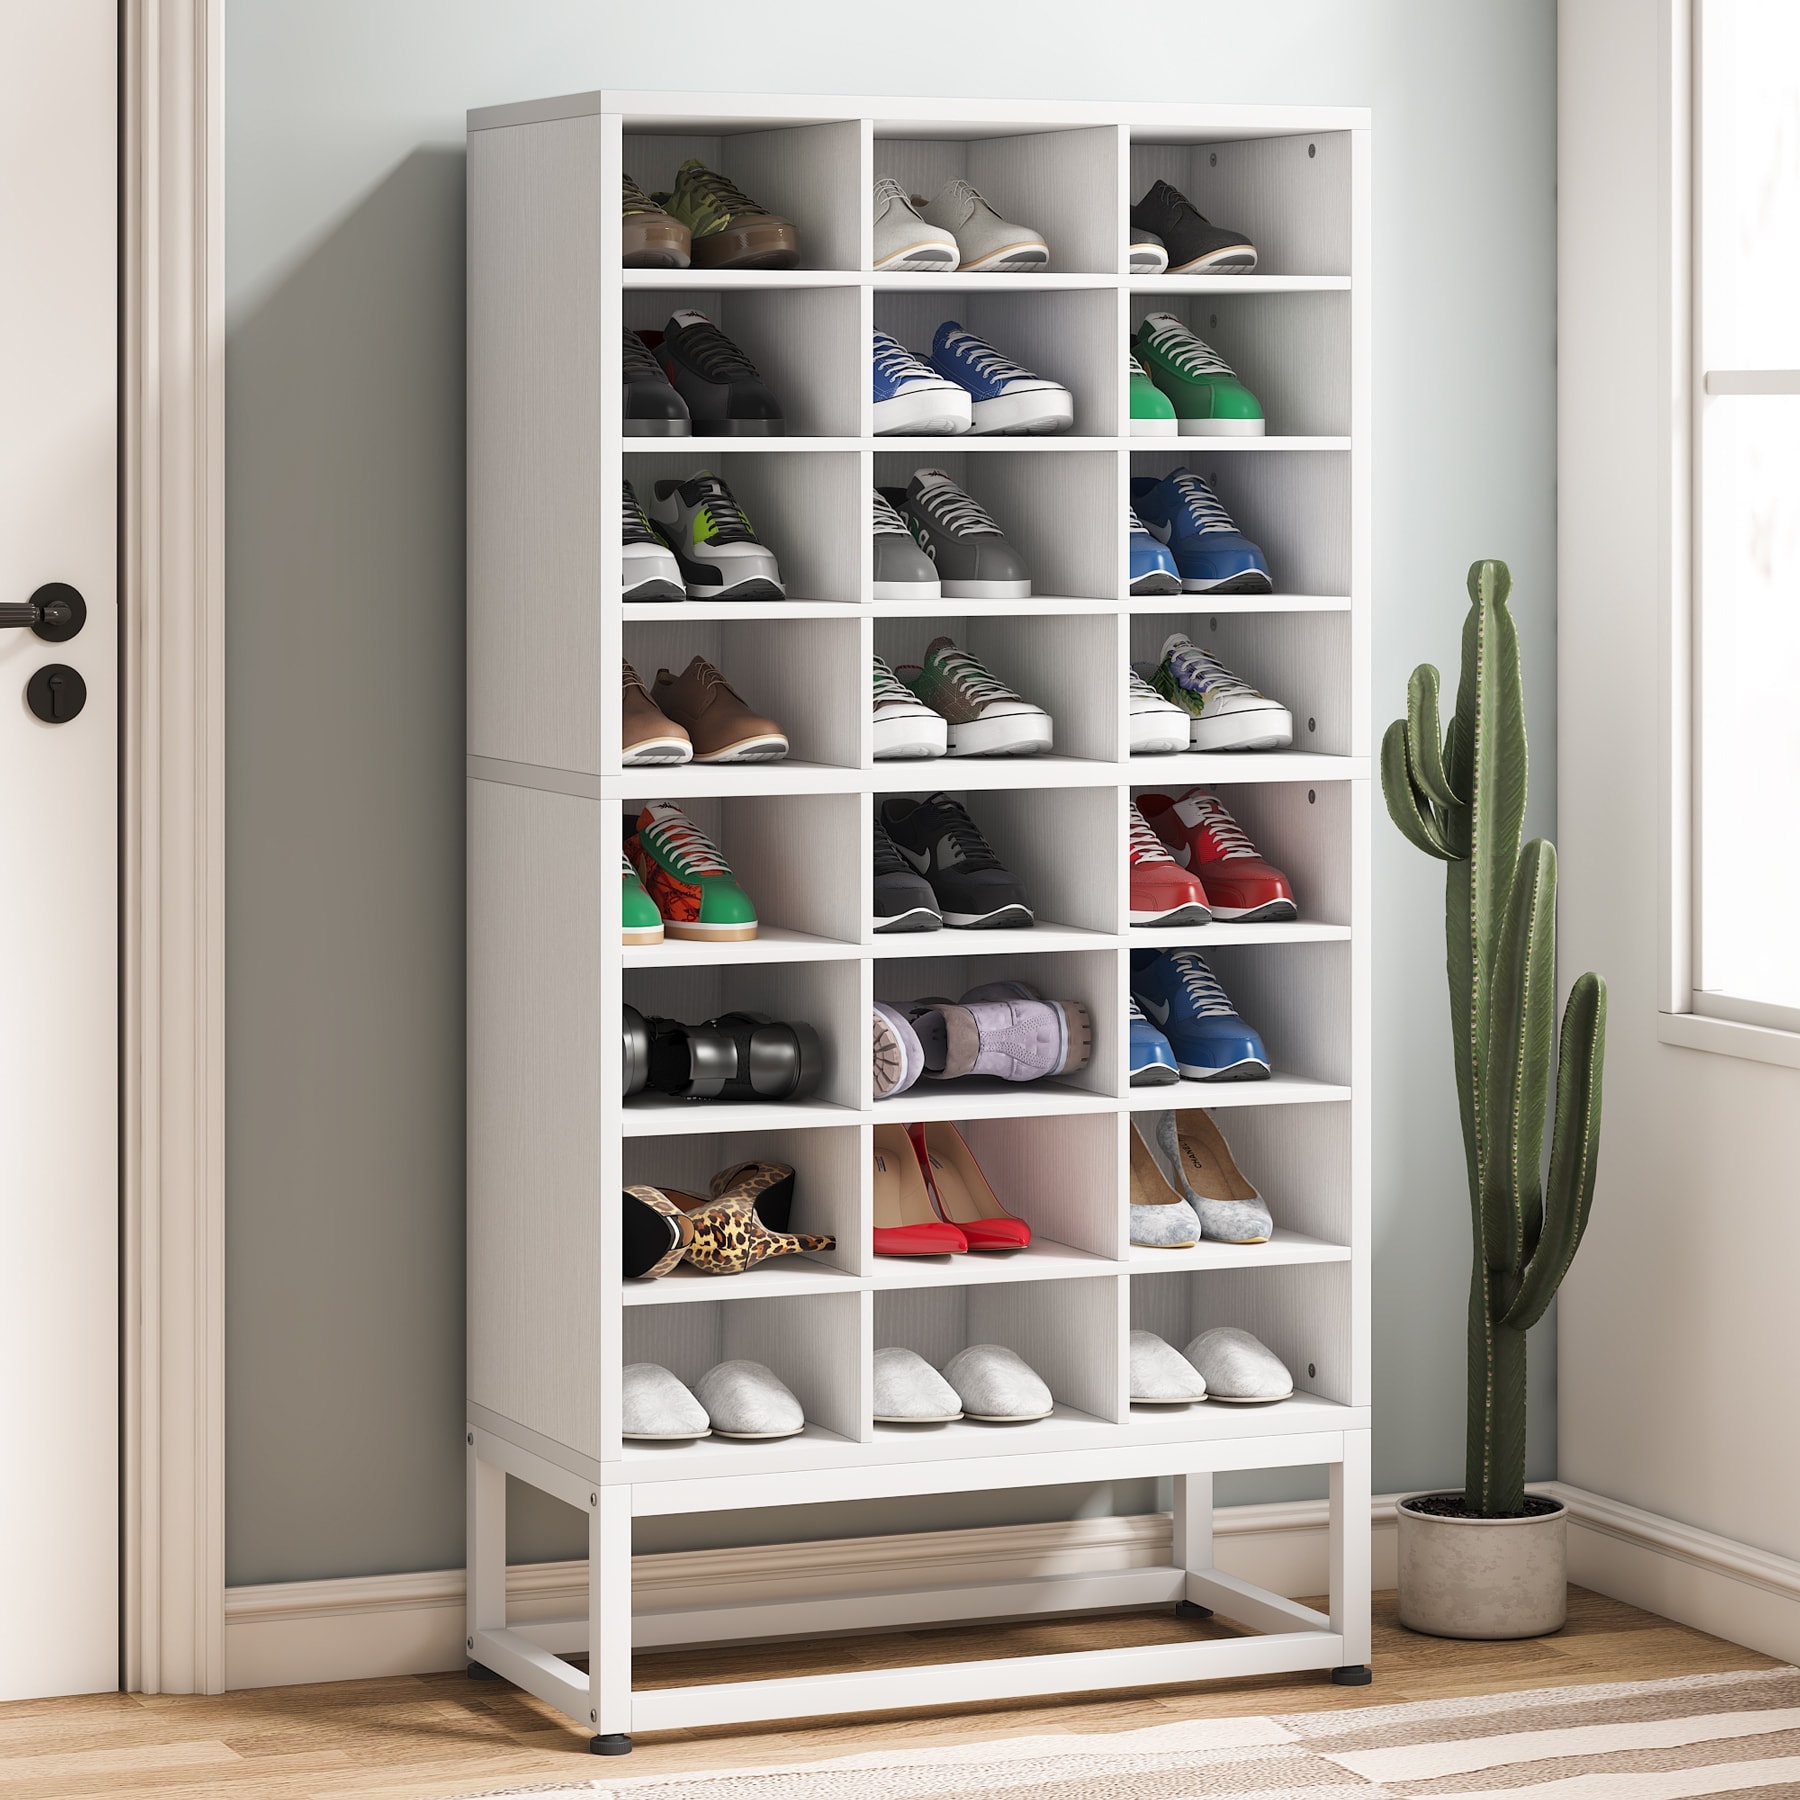 https://ak1.ostkcdn.com/images/products/is/images/direct/200c57114213812d55468c1970d6b9724730c697/White-24-Pair-Shoe-Storage-Cabinet%2C-8-Tier-Feestanding-Cube-Shoe-Rack-Closet-Organizers-for-Bedroom%2C-Hallway.jpg